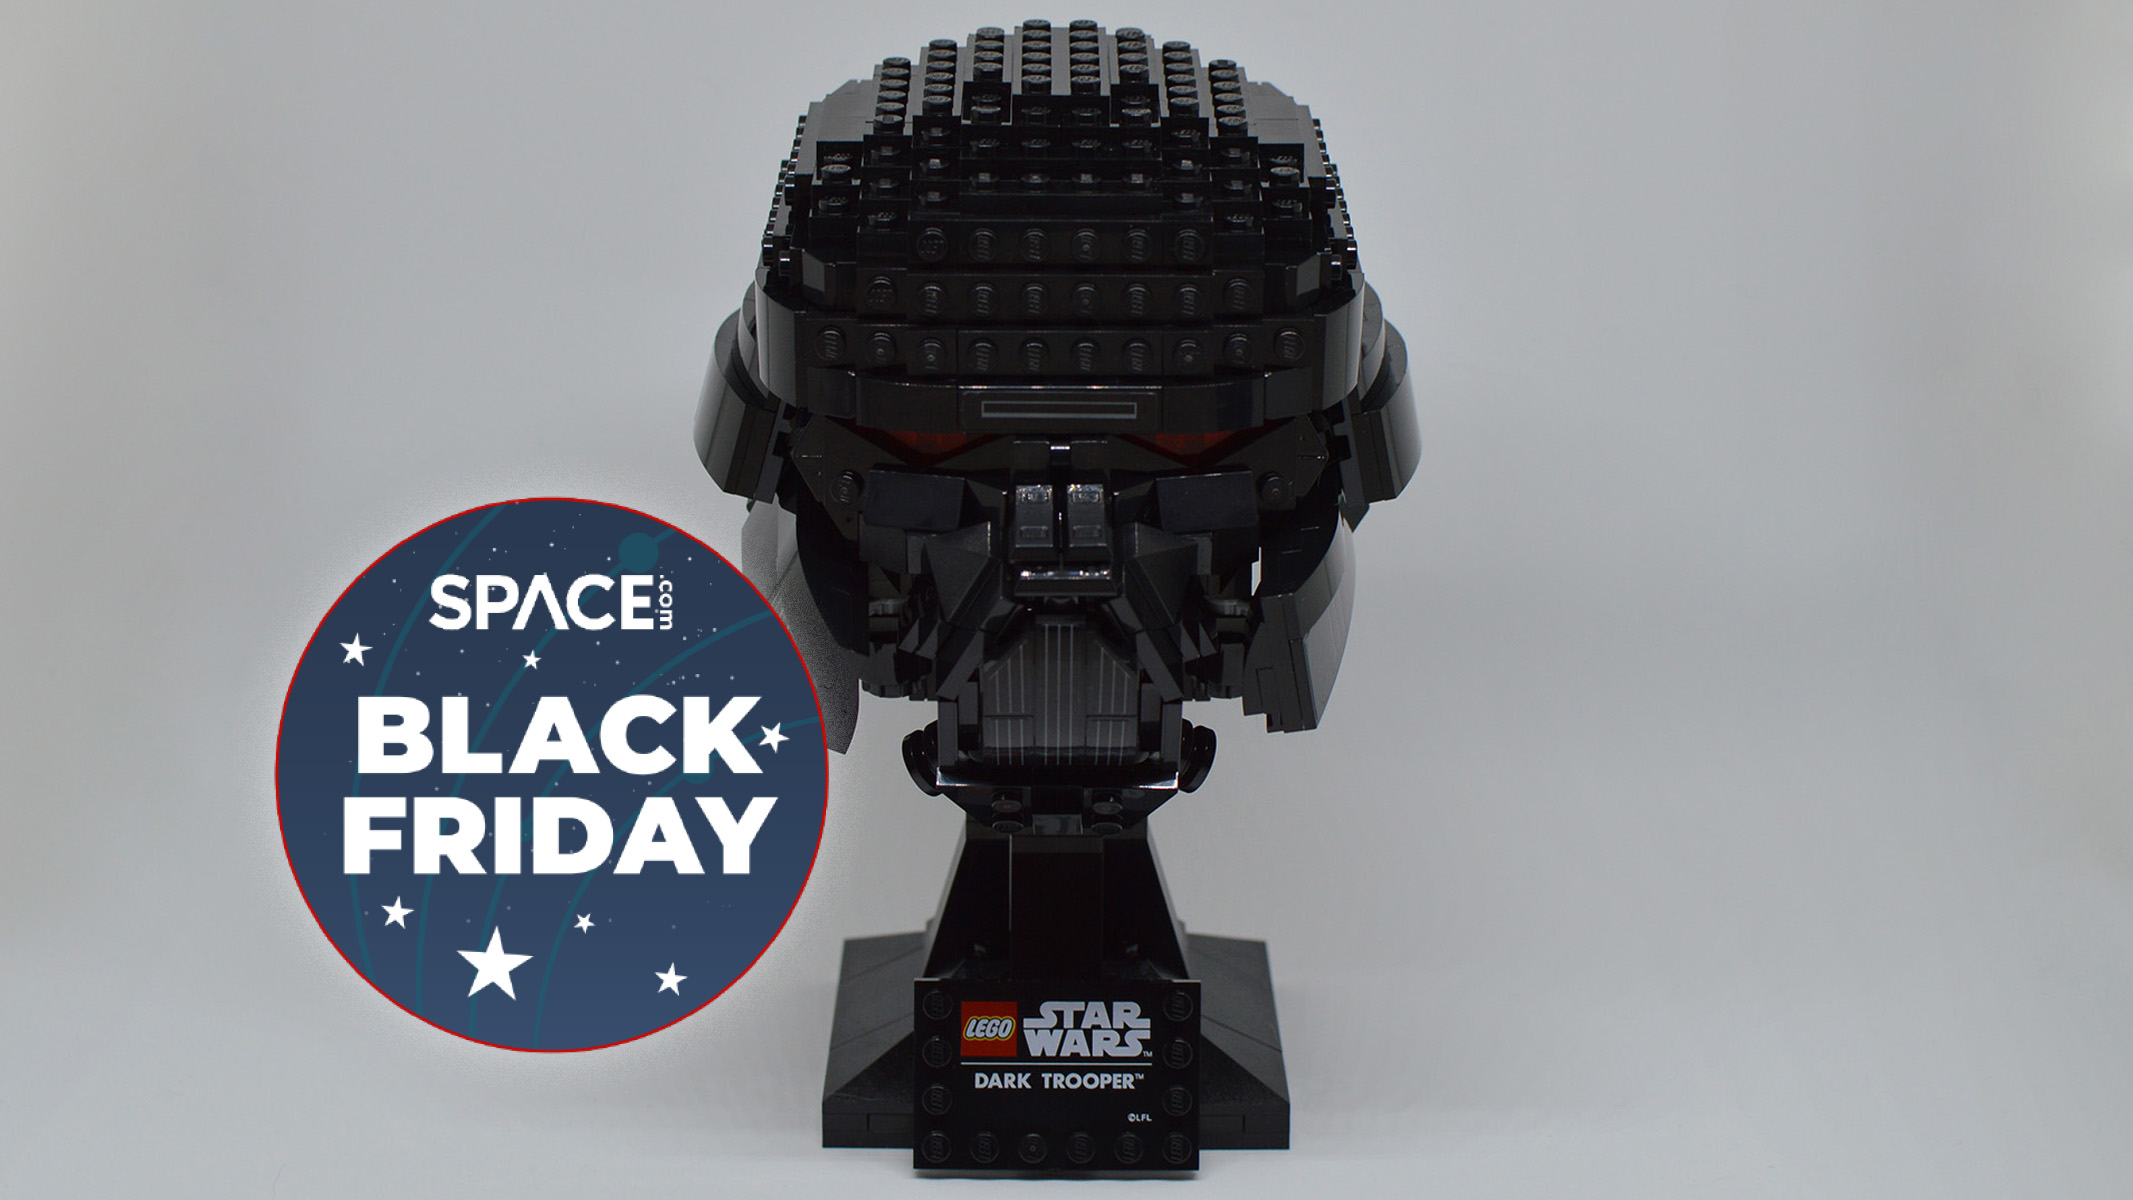 Save 20% on Lego Star Wars Dark Trooper Helmet this Black Friday